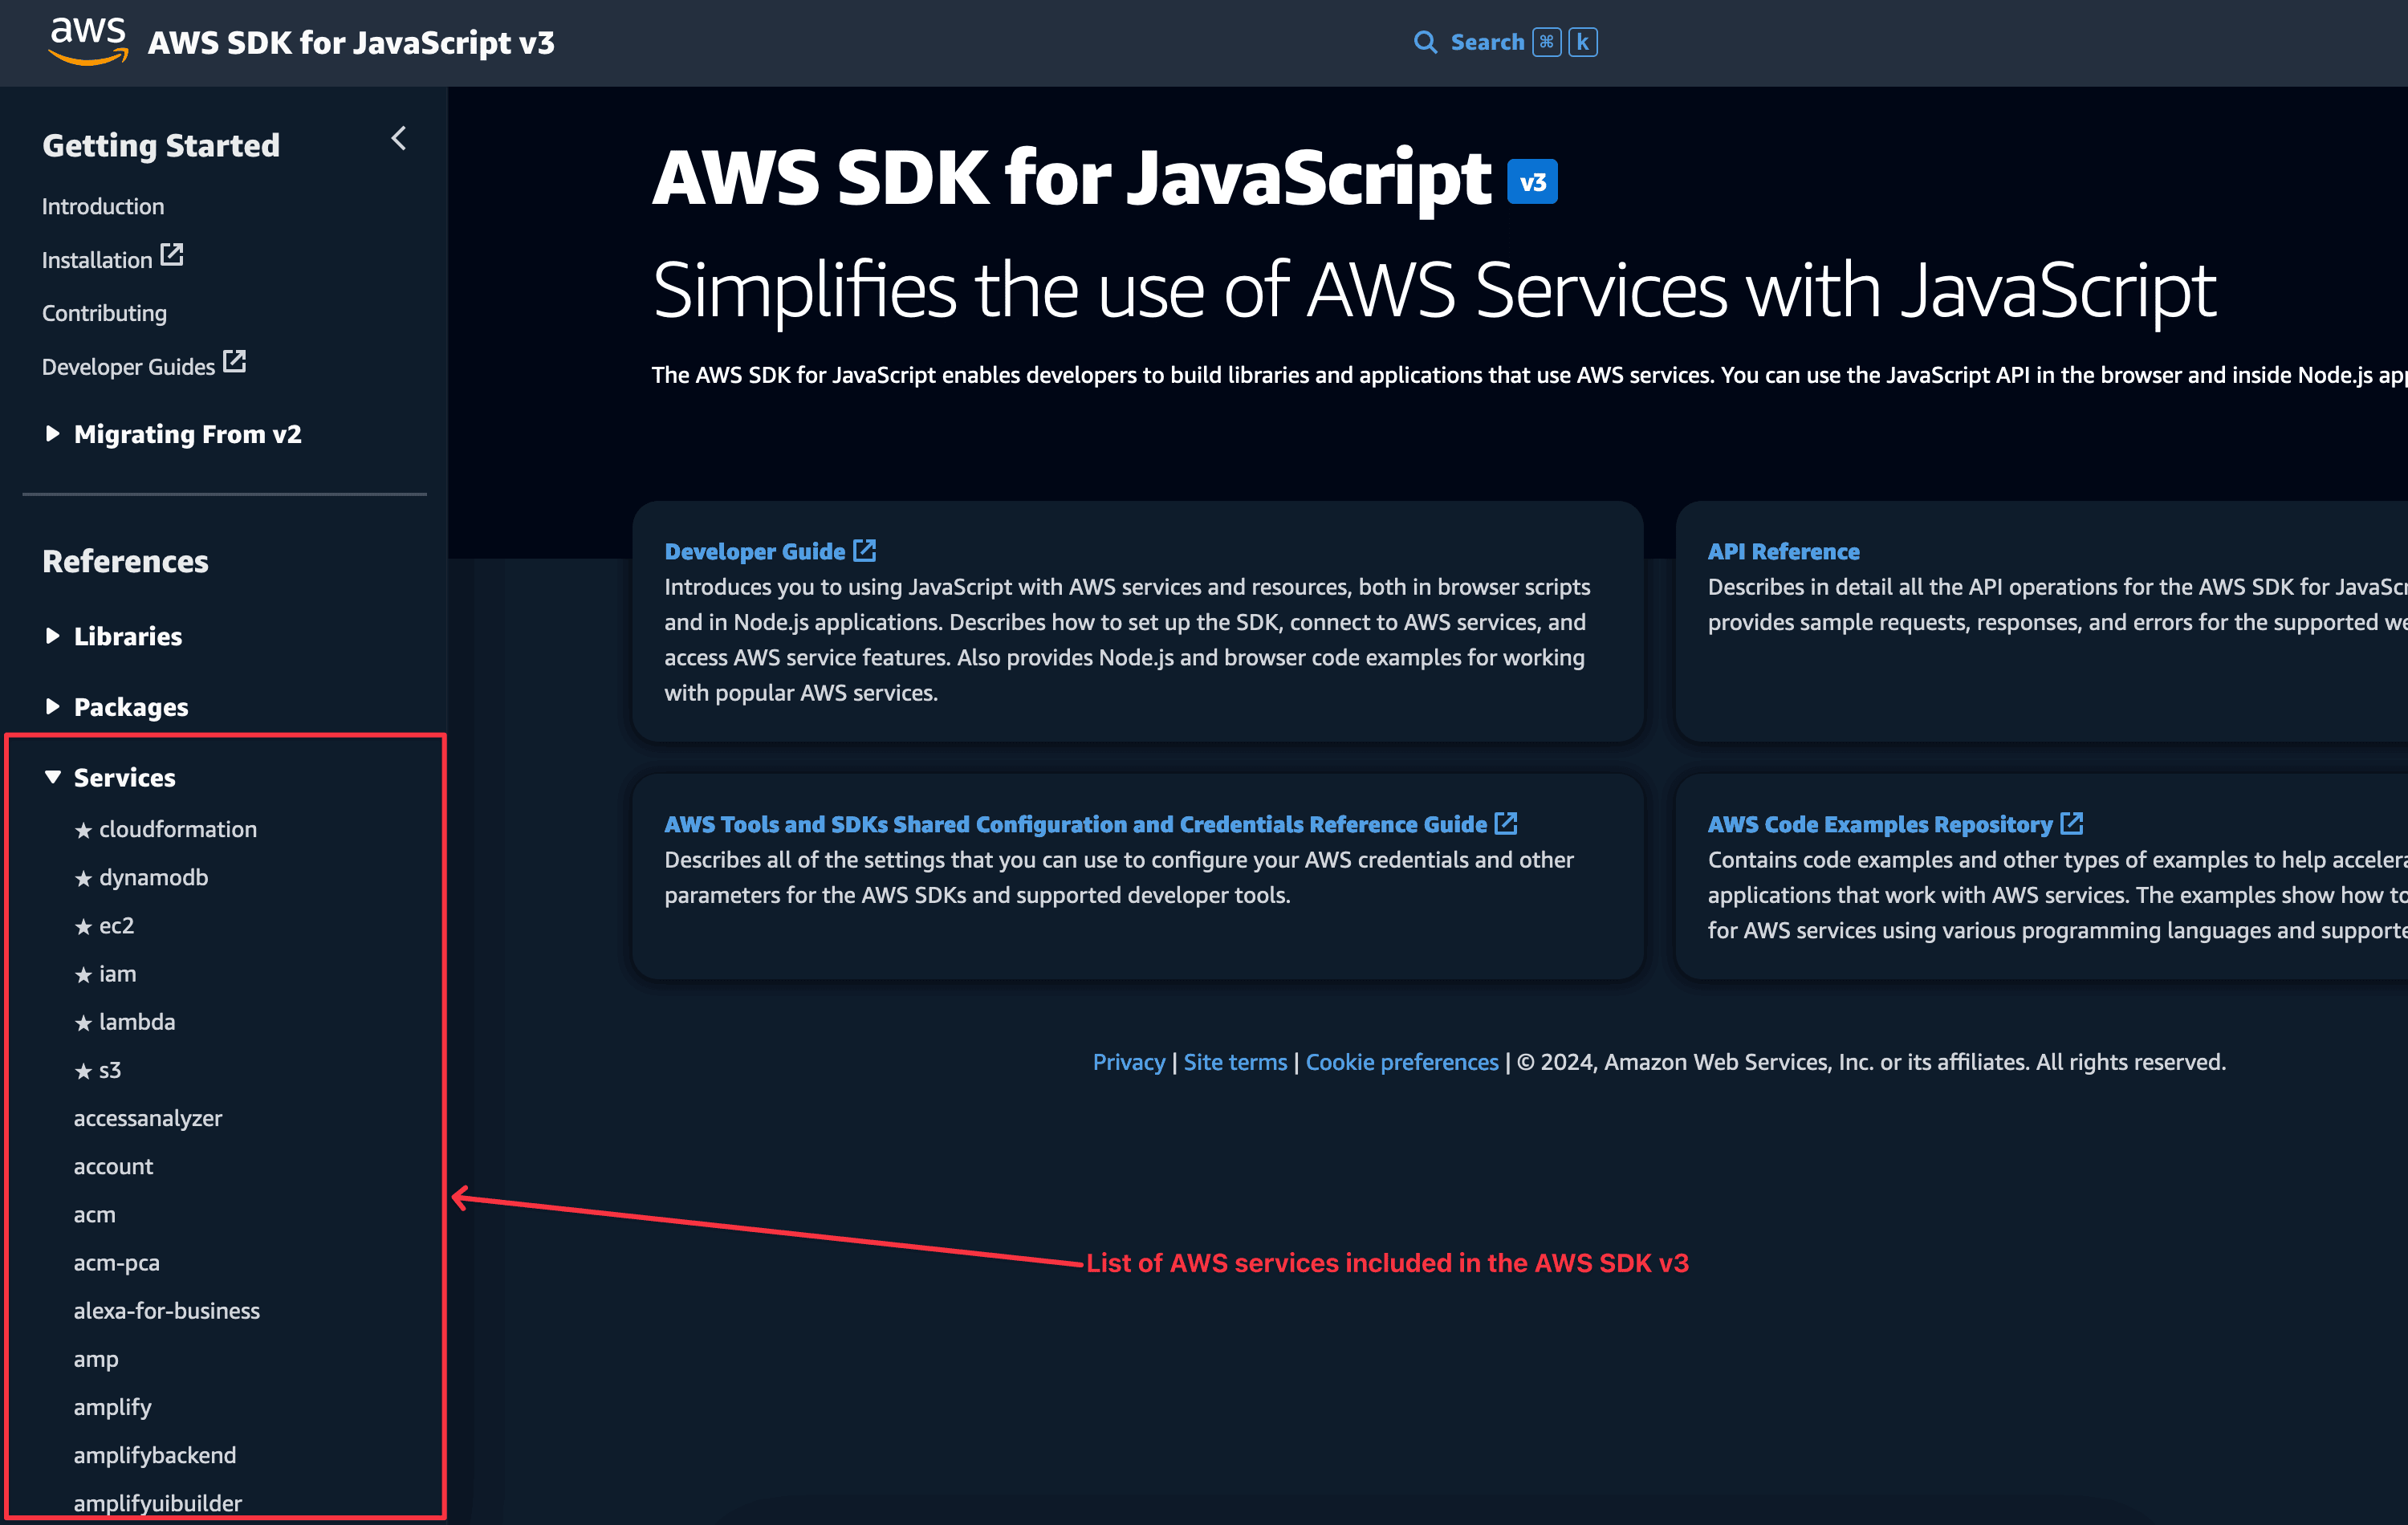 Homepage of the AWS SDK for JavaScript v3.